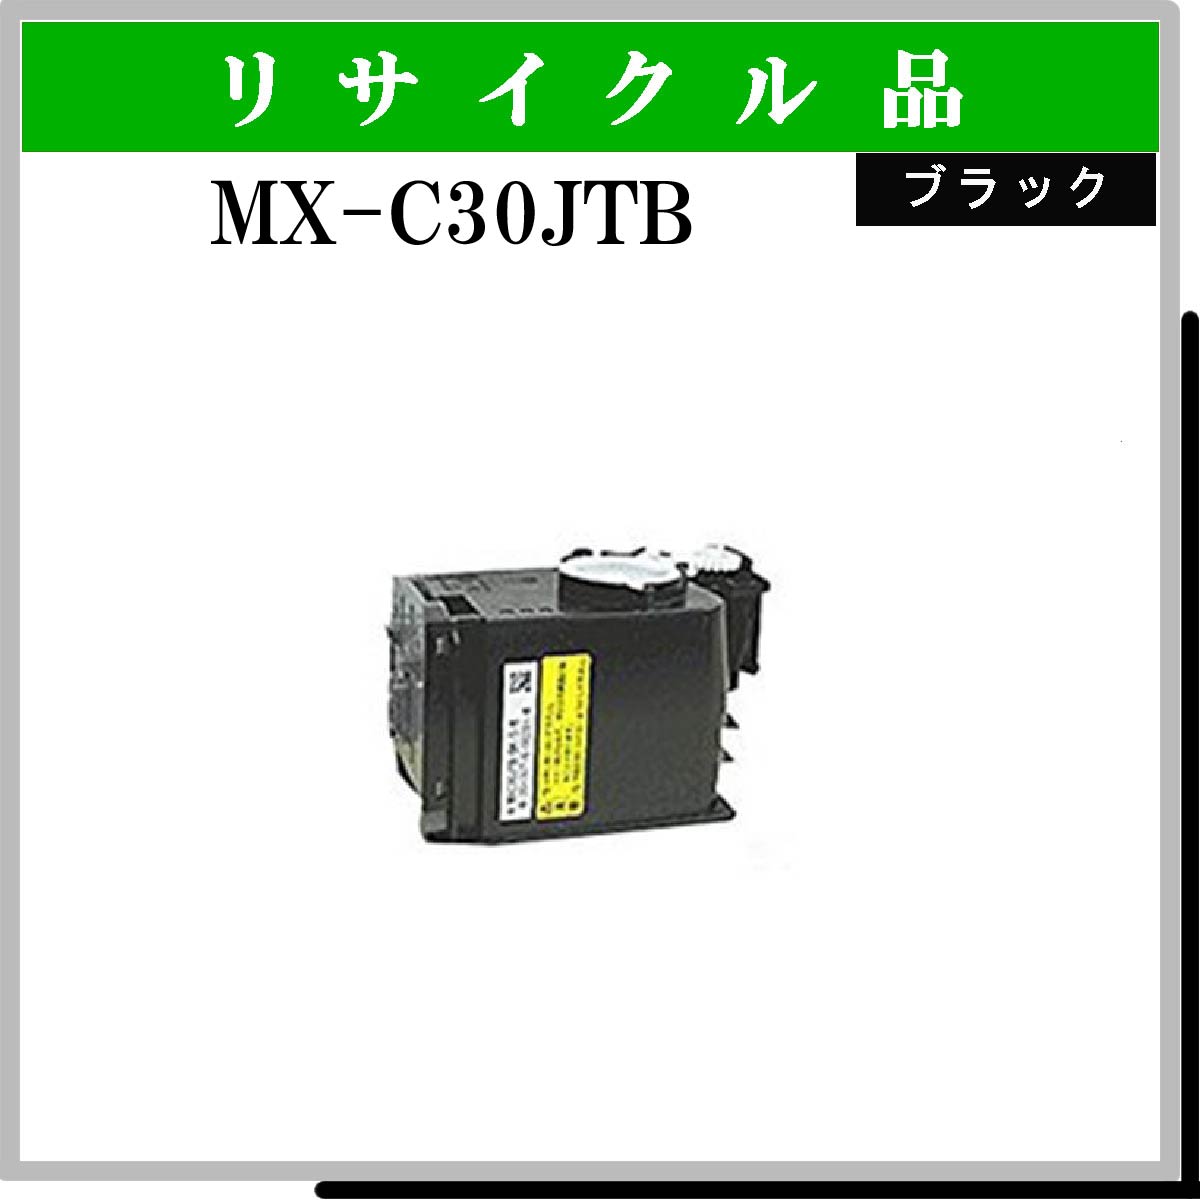 MX-C30JTB